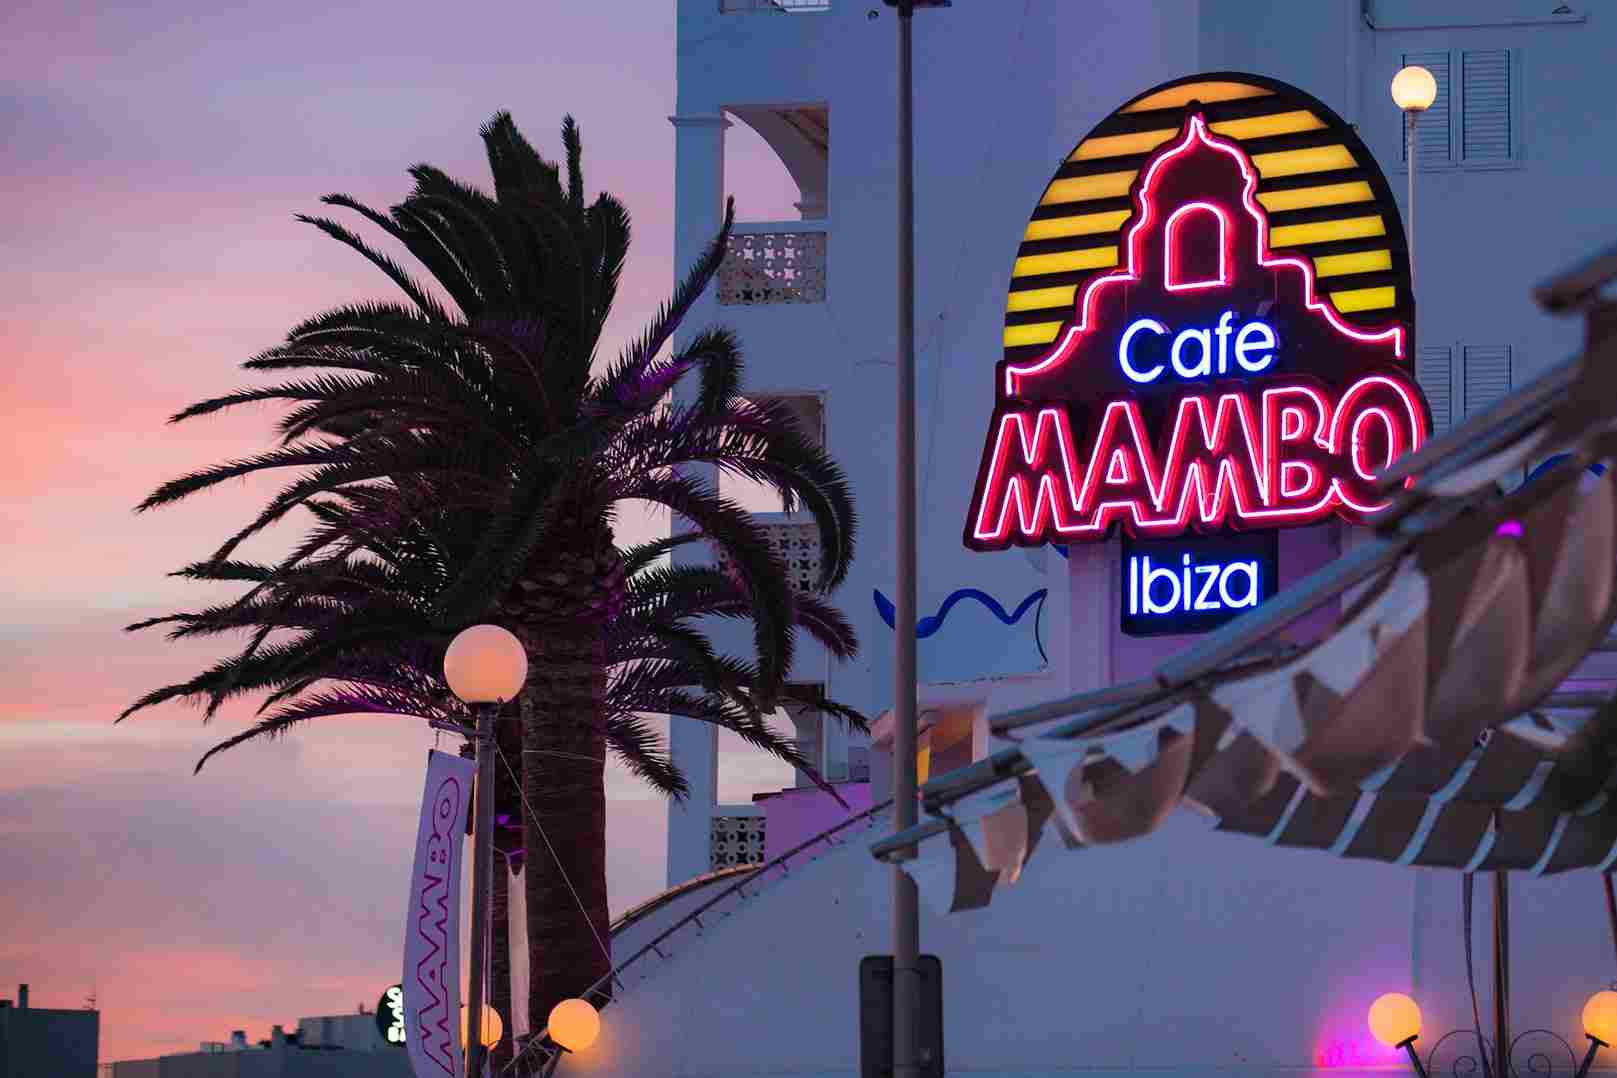 Café Mambo Ibiza Brings ‘Classics Under The Bridge’ to Peterborough